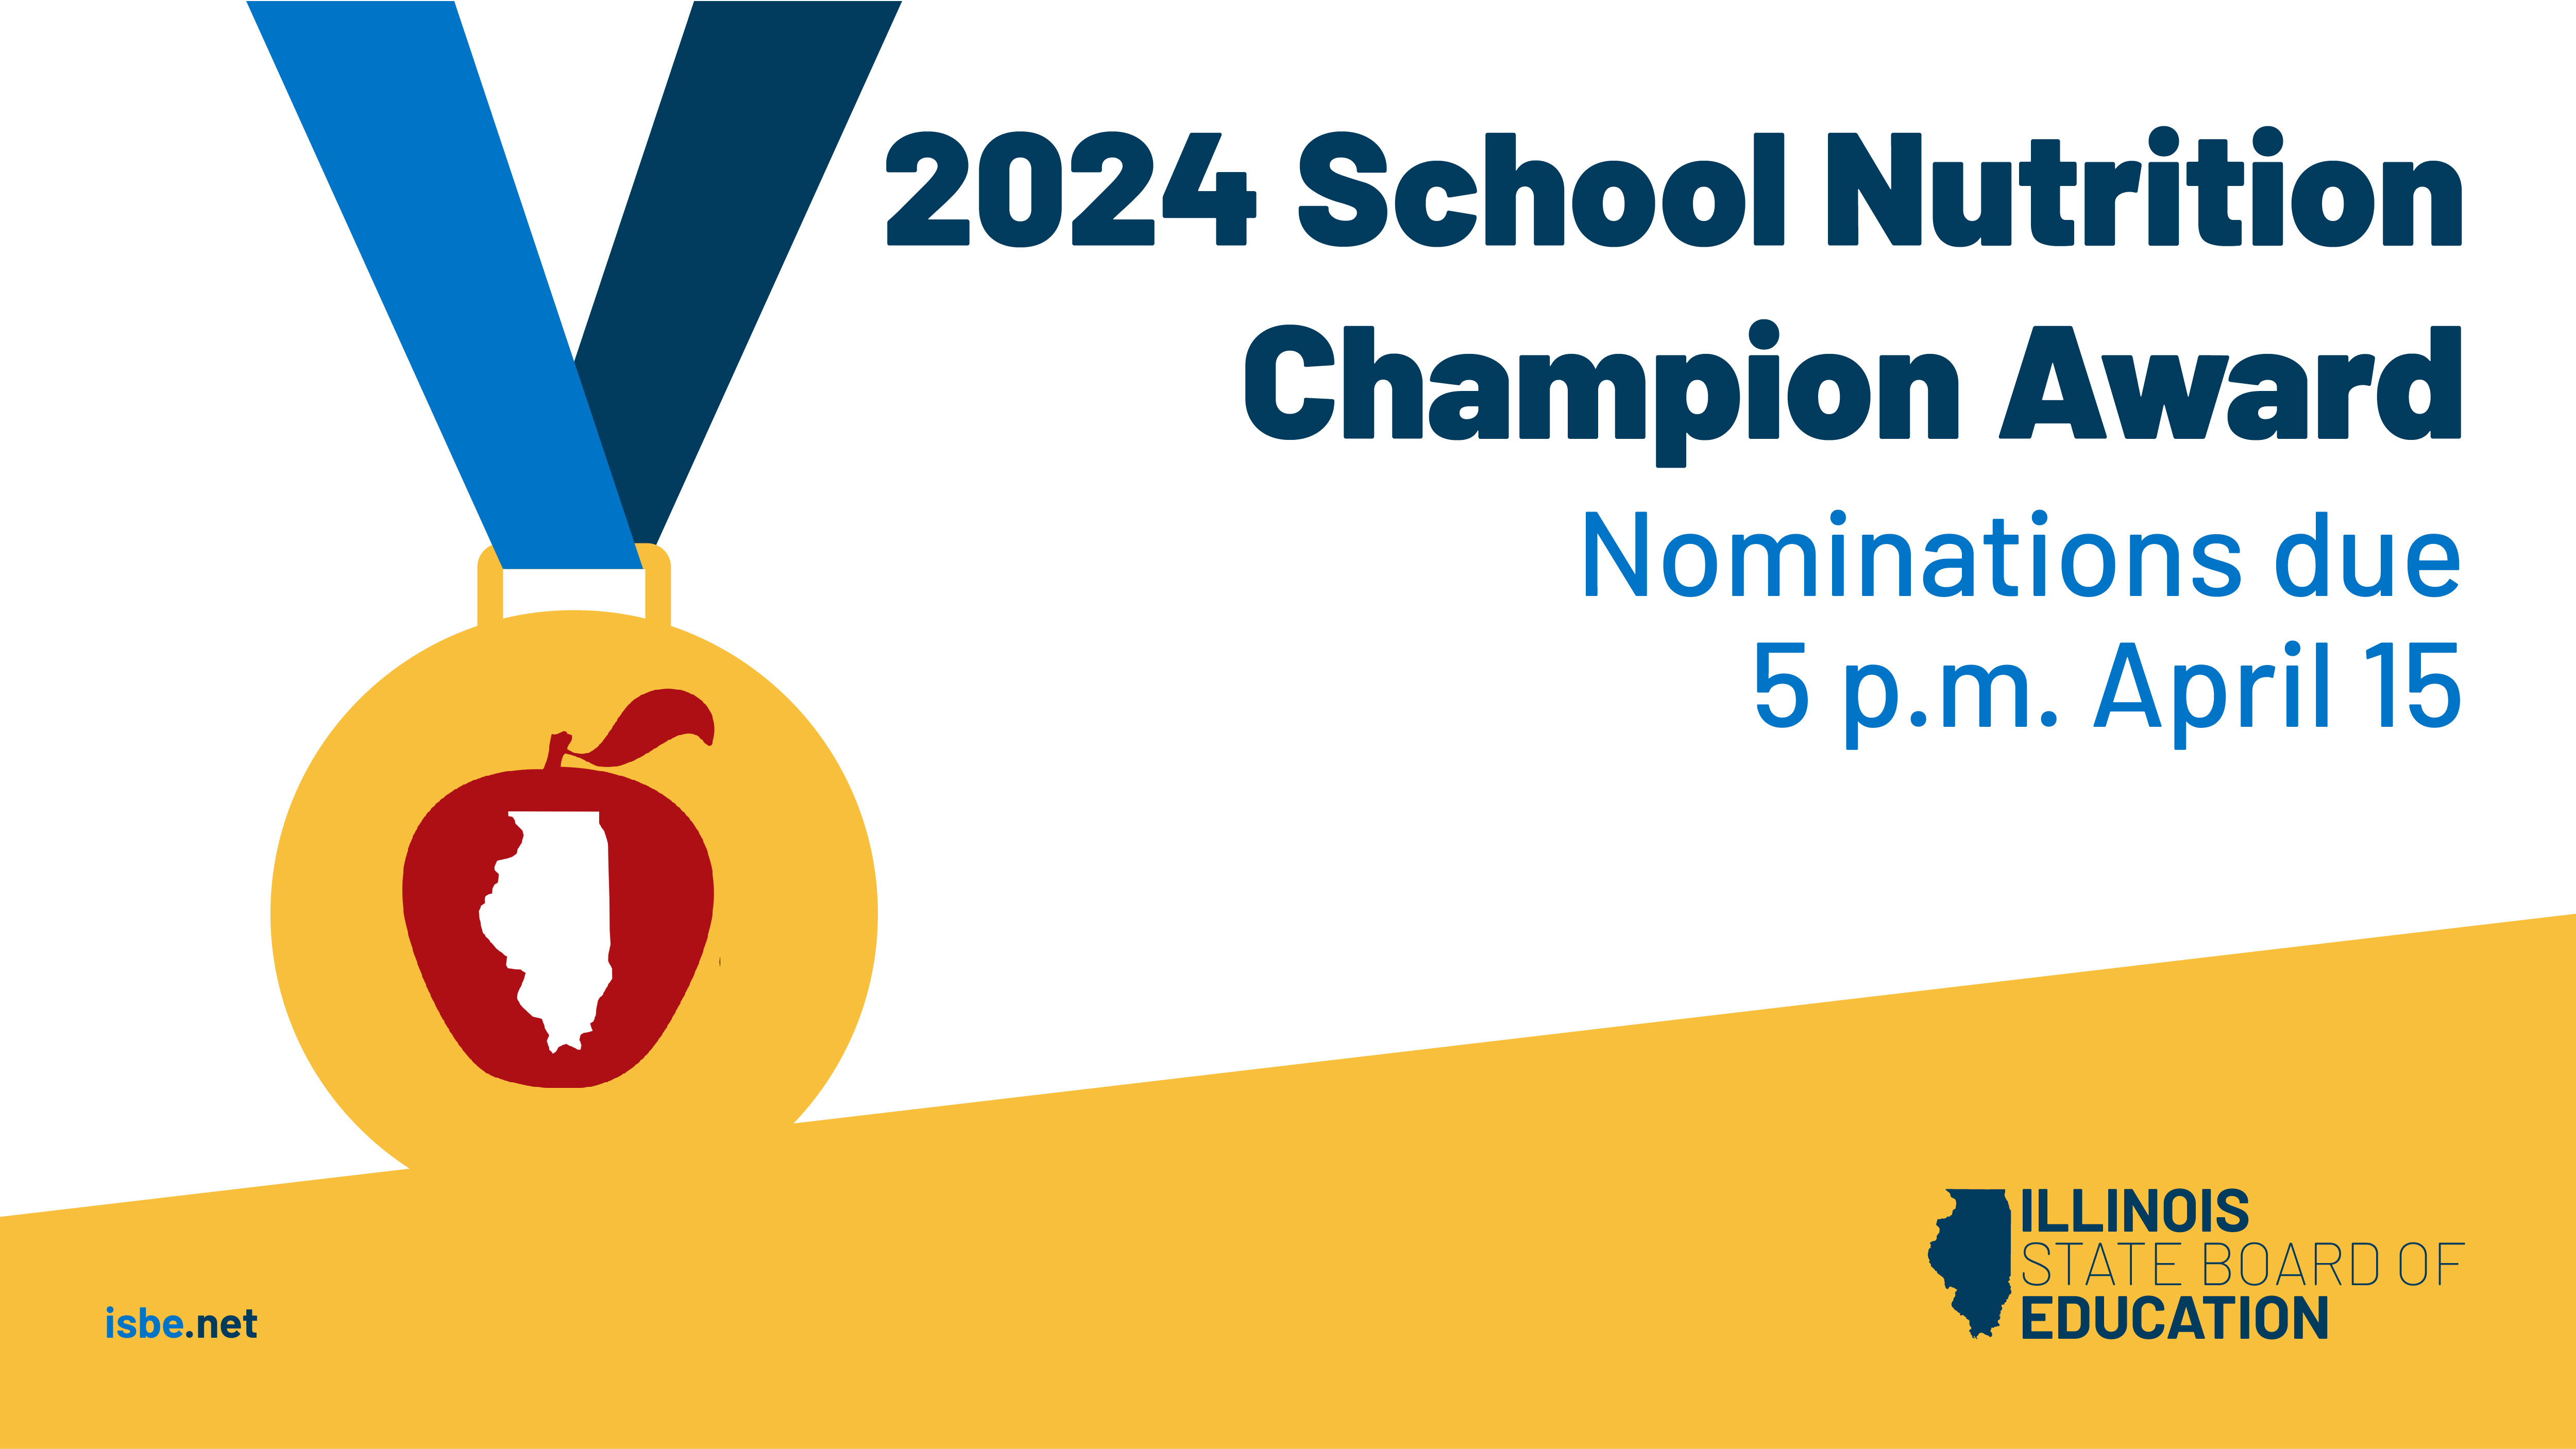 2024 School Nutrition Champion Award nominations due 5p.m. on April 15.